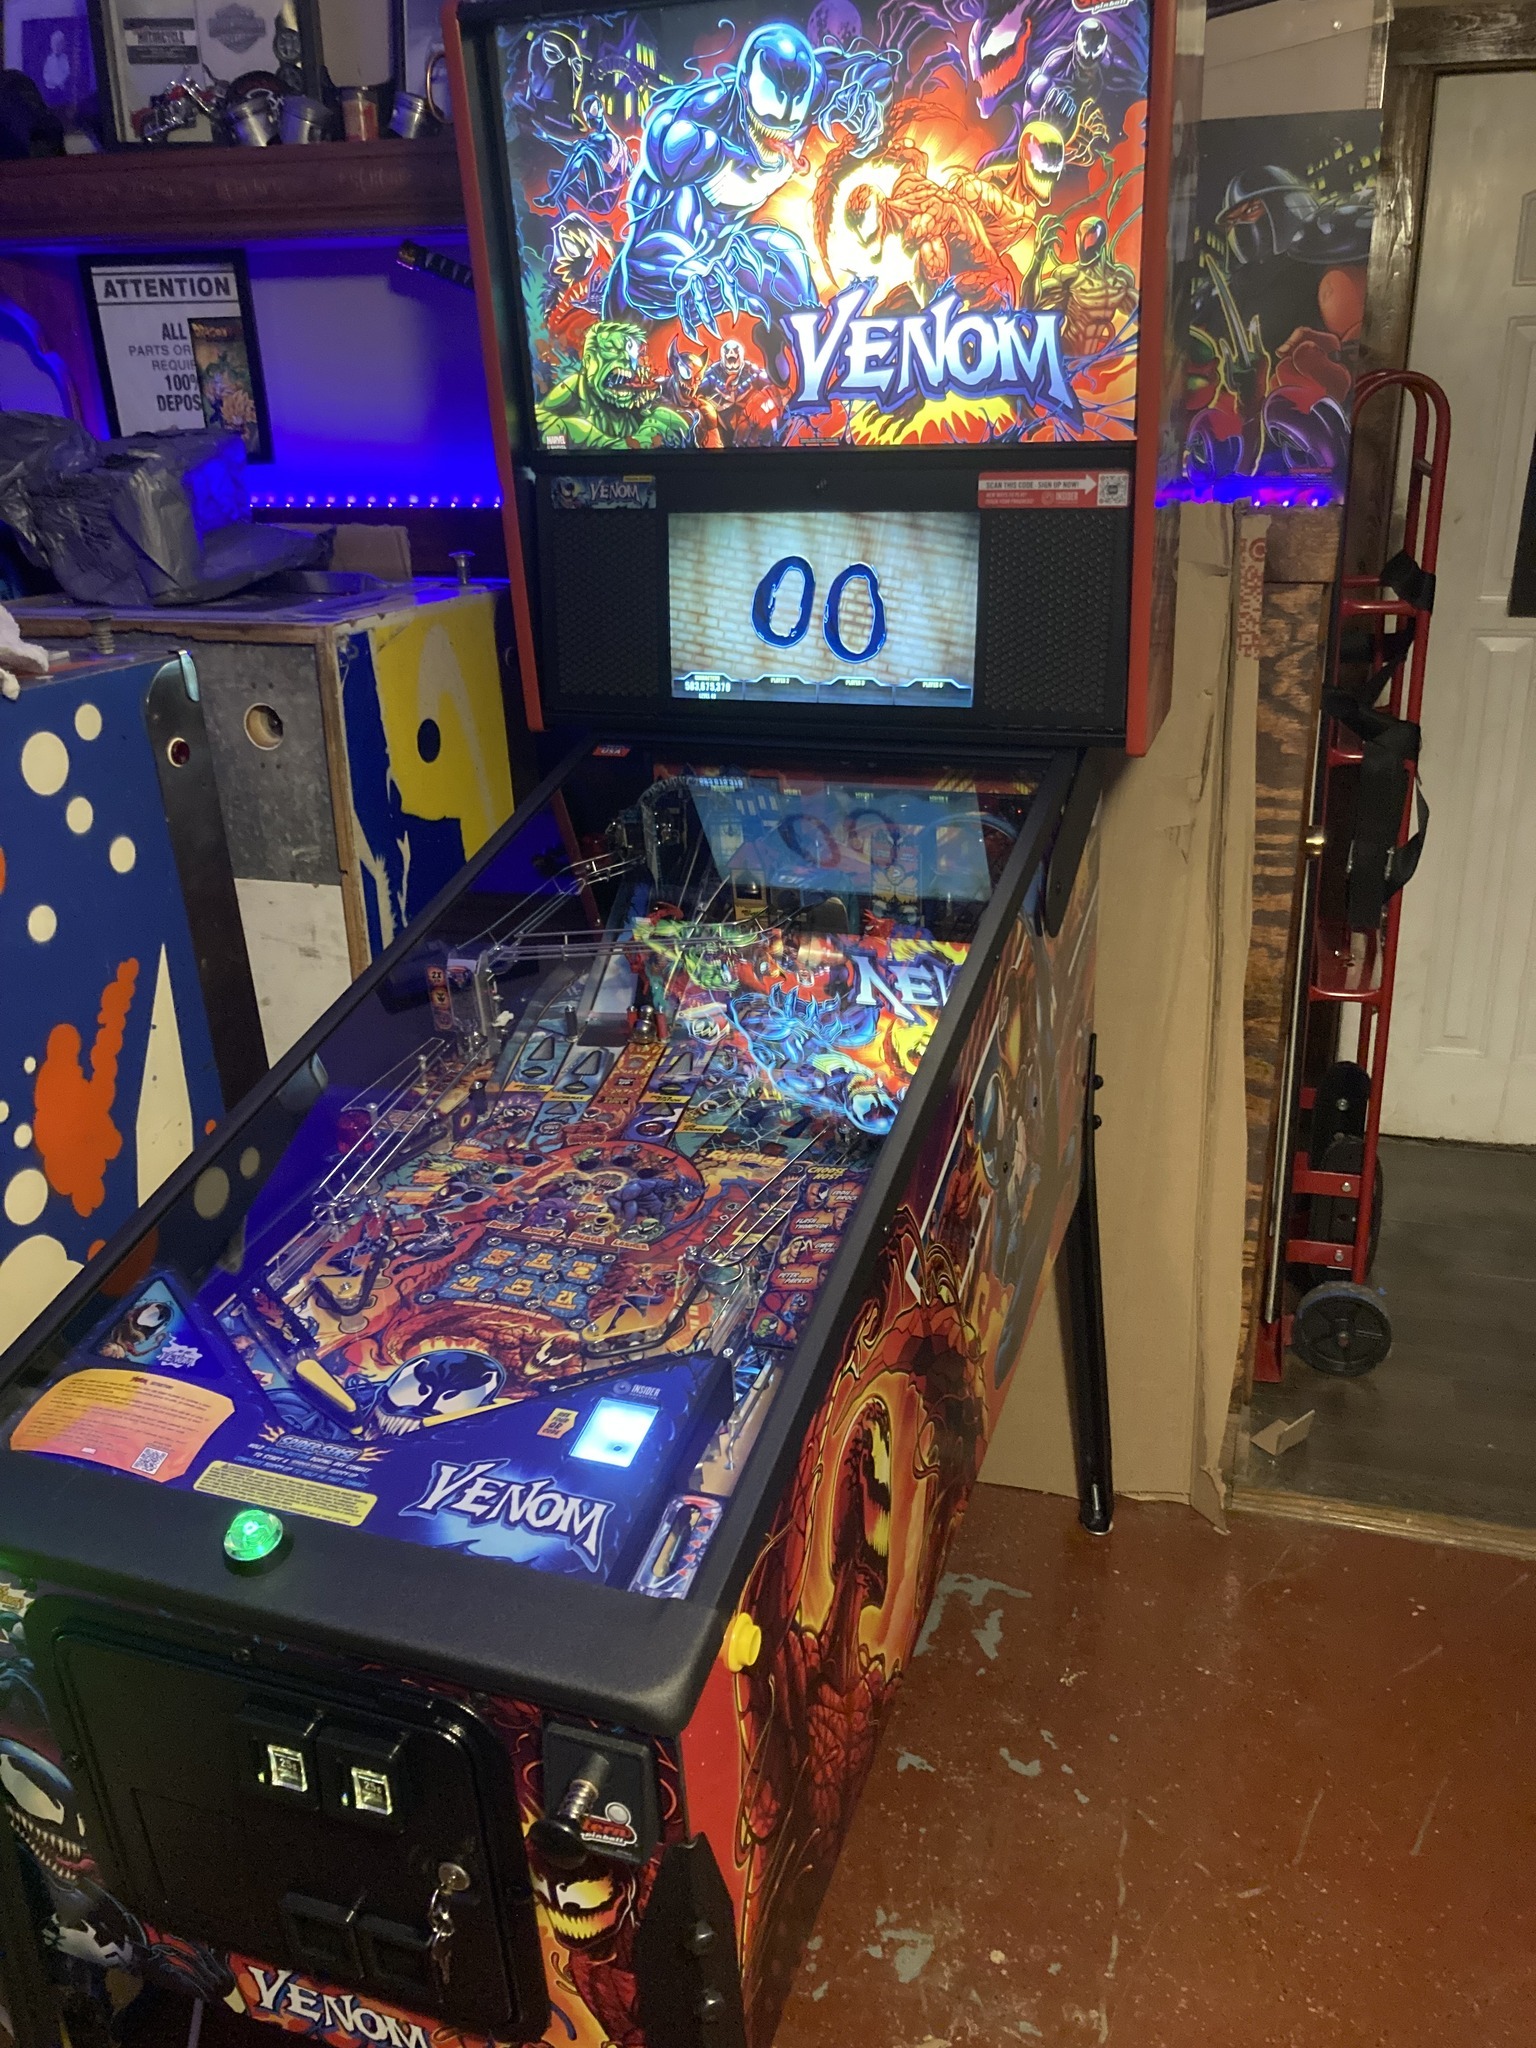 Venom Premium Pinball Machine by Stern